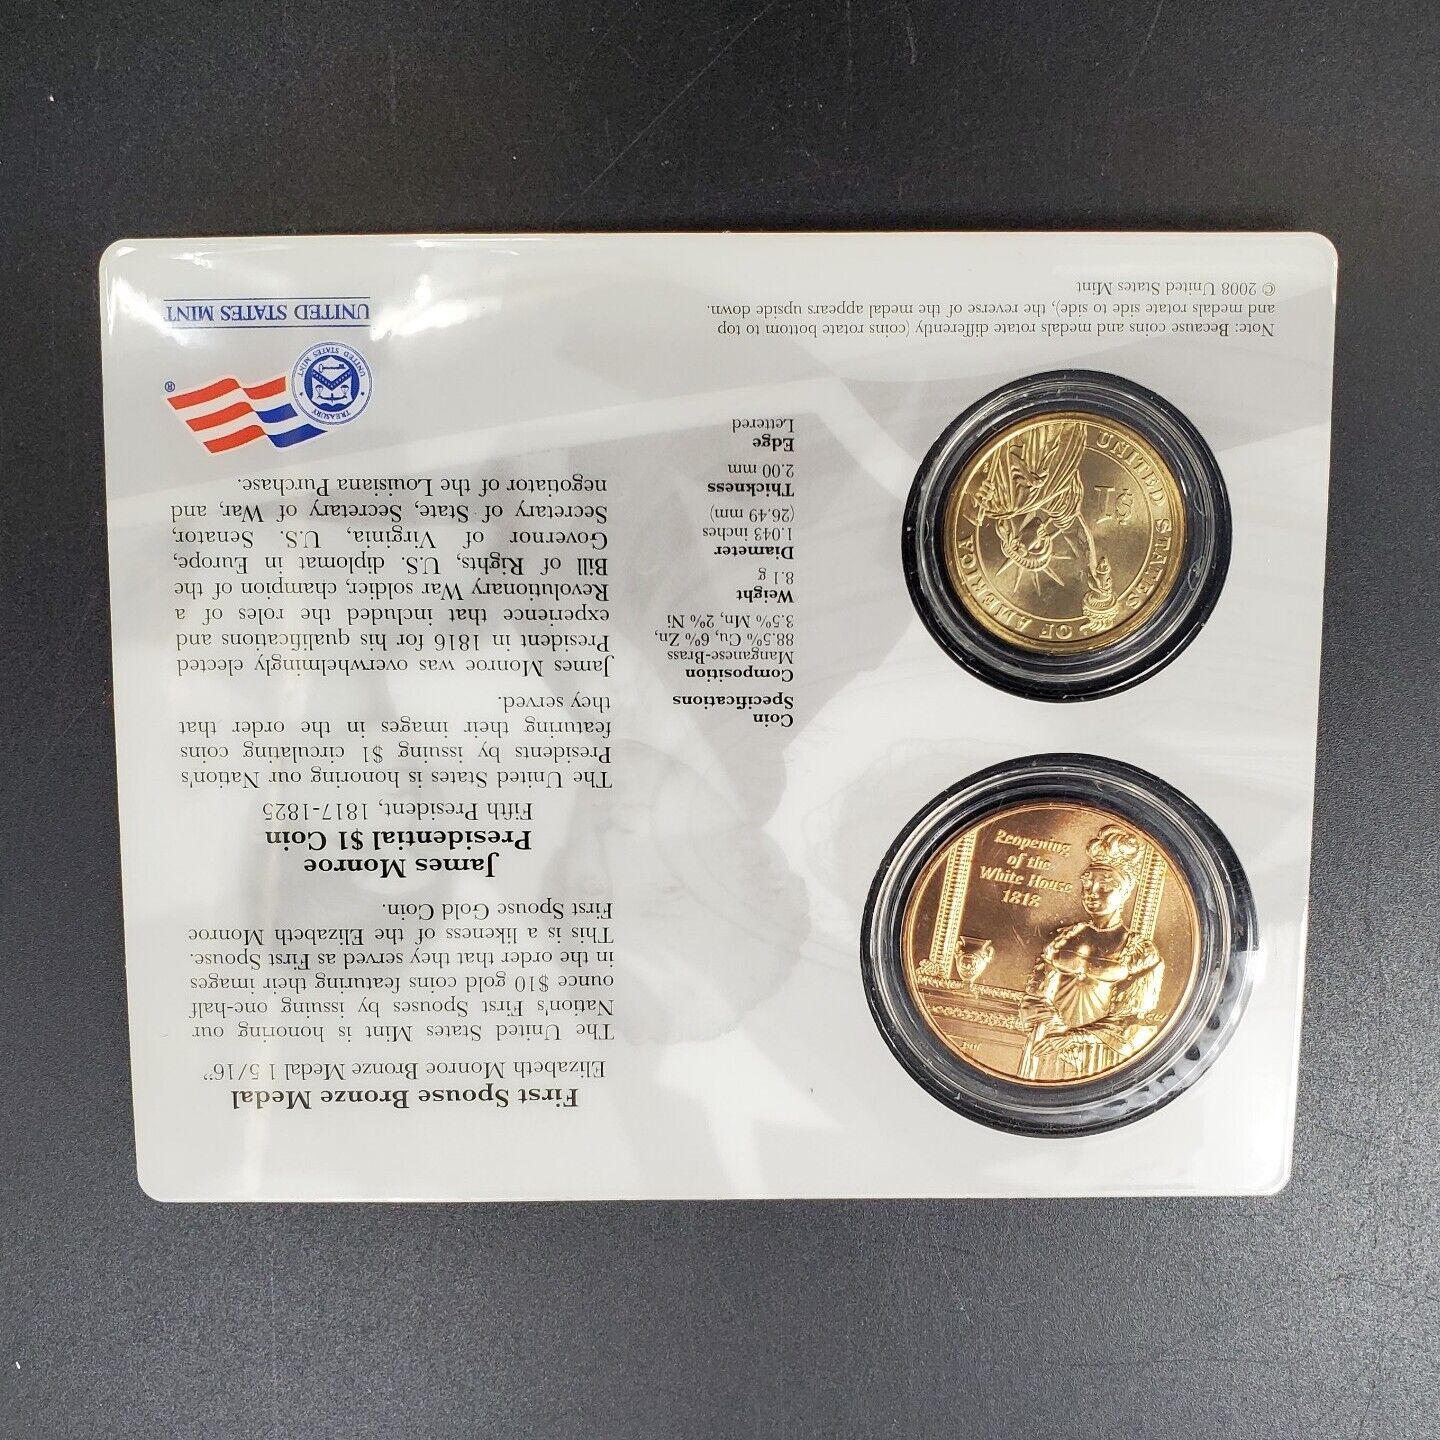 U.S. Mint Presidential $1 Coin and Spouse Medal Set : James & Elizabeth Monroe